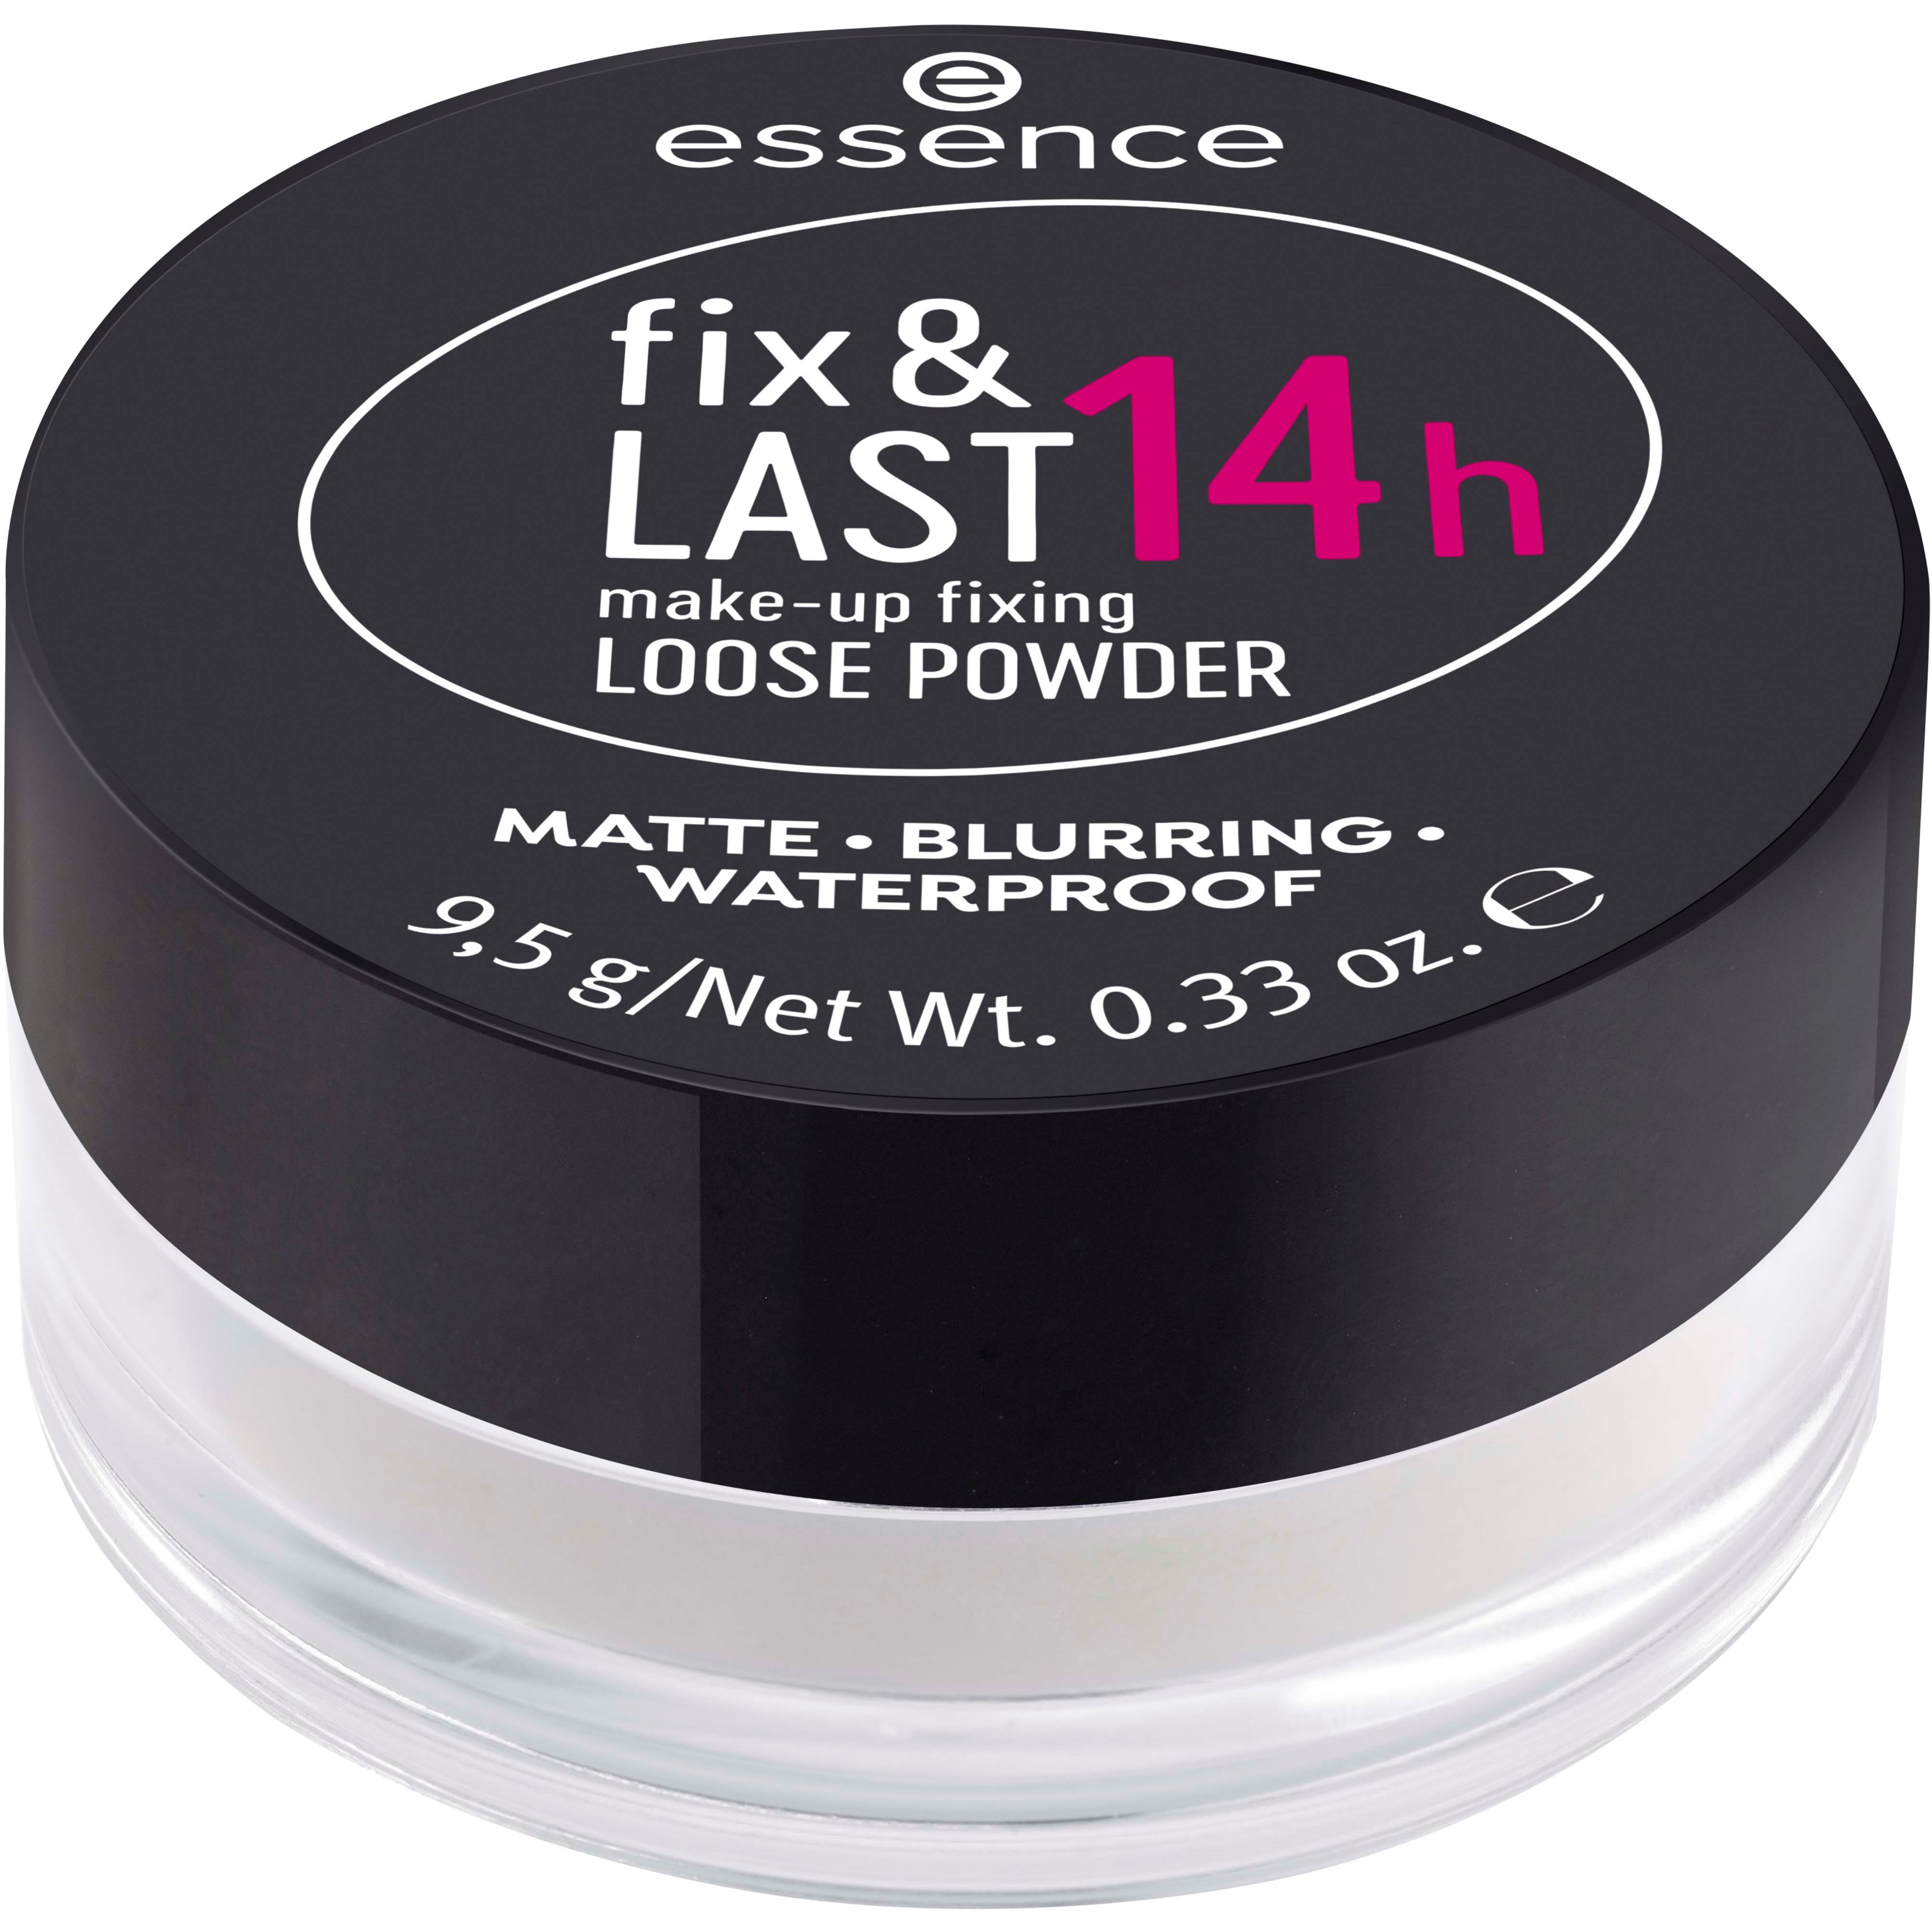 Bilde av Essence Fix & Last 14h Make-up Fixing Loose Powder